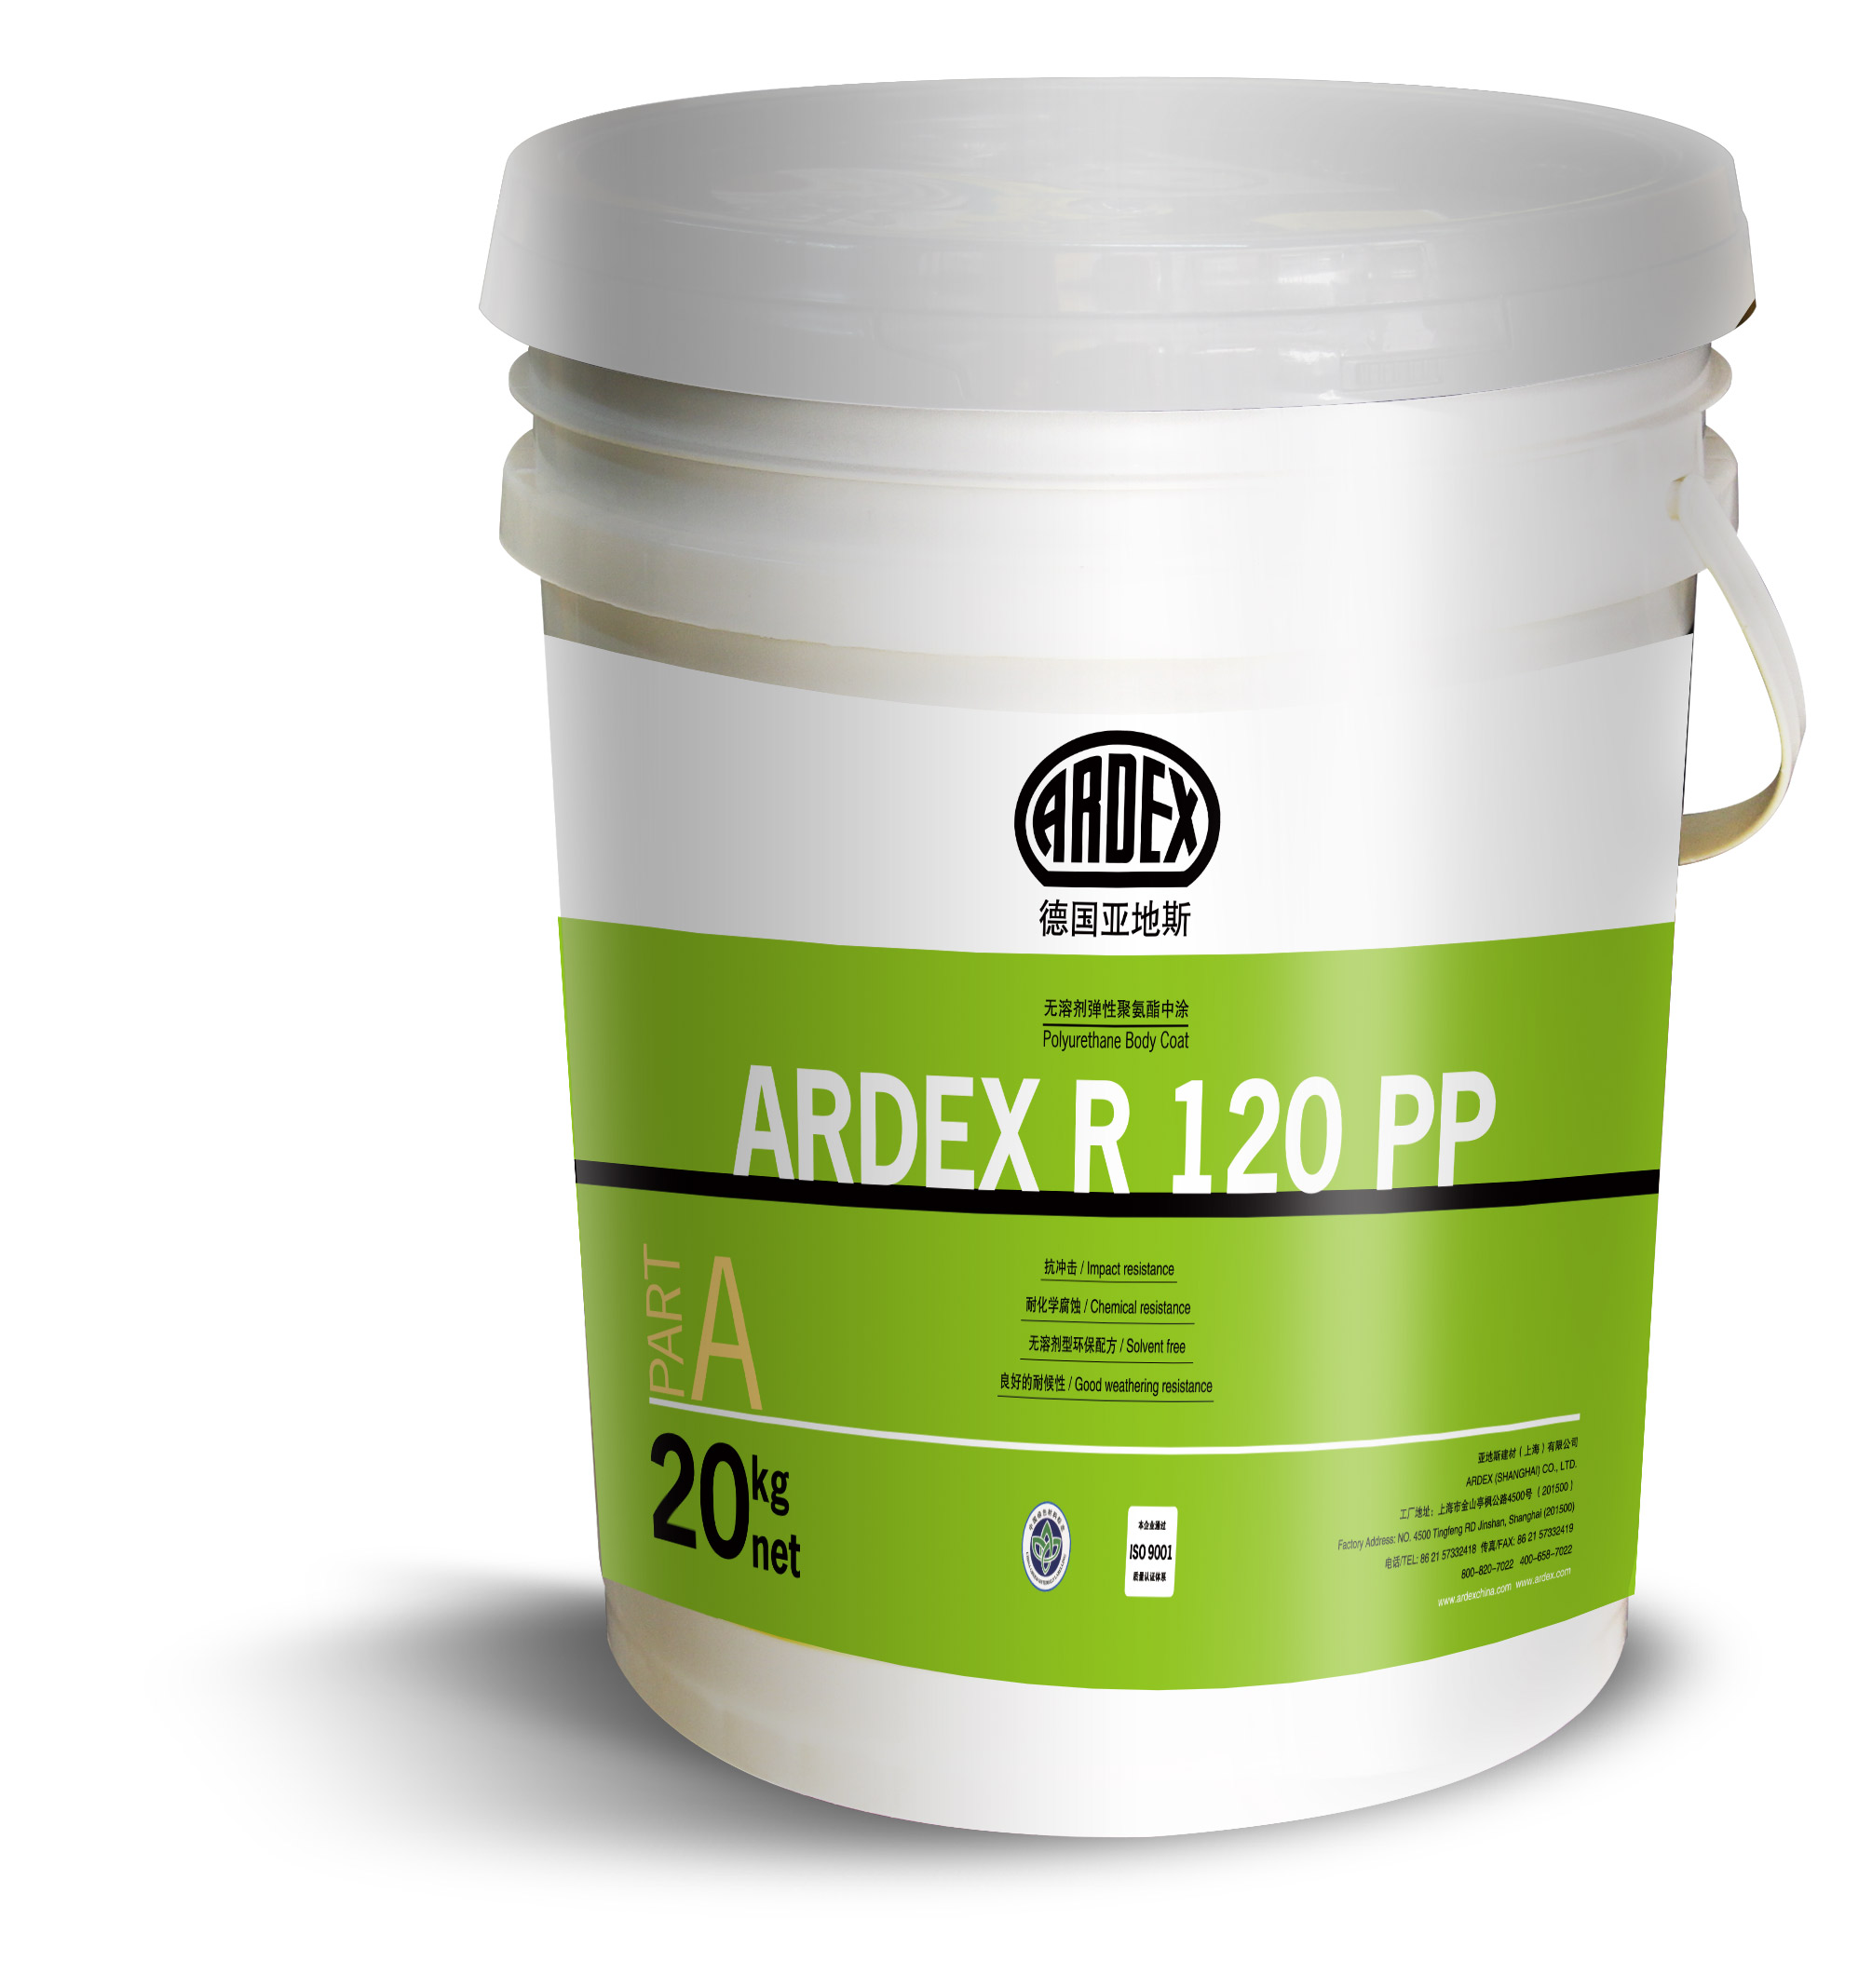 ARDEX R 120 PP